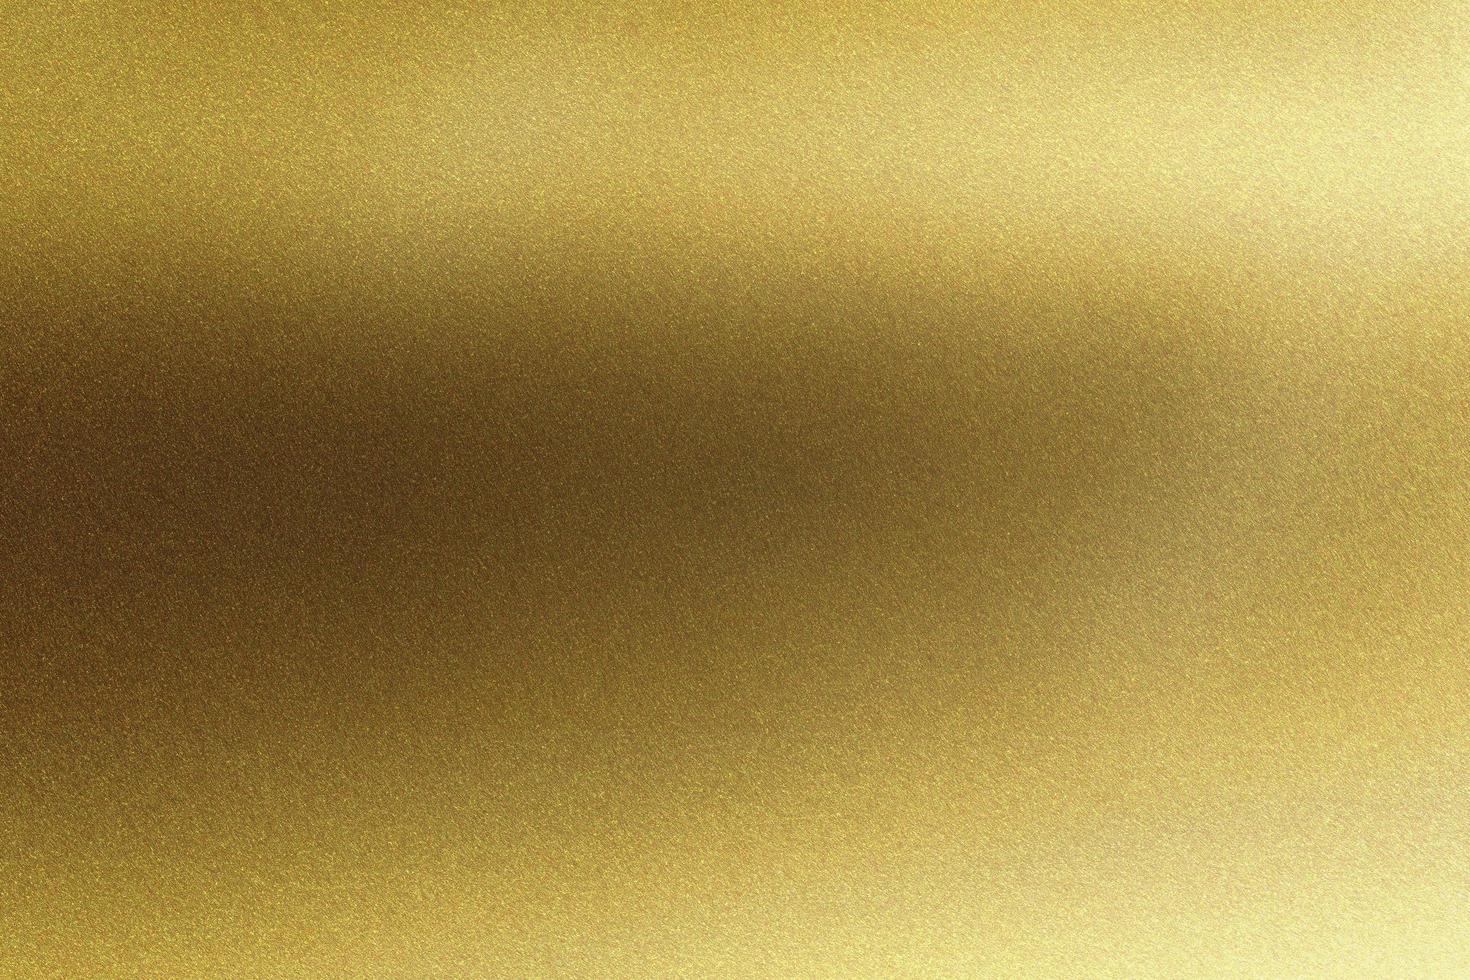 fond de texture abstraite, plaque métallique dorée polie brillante photo